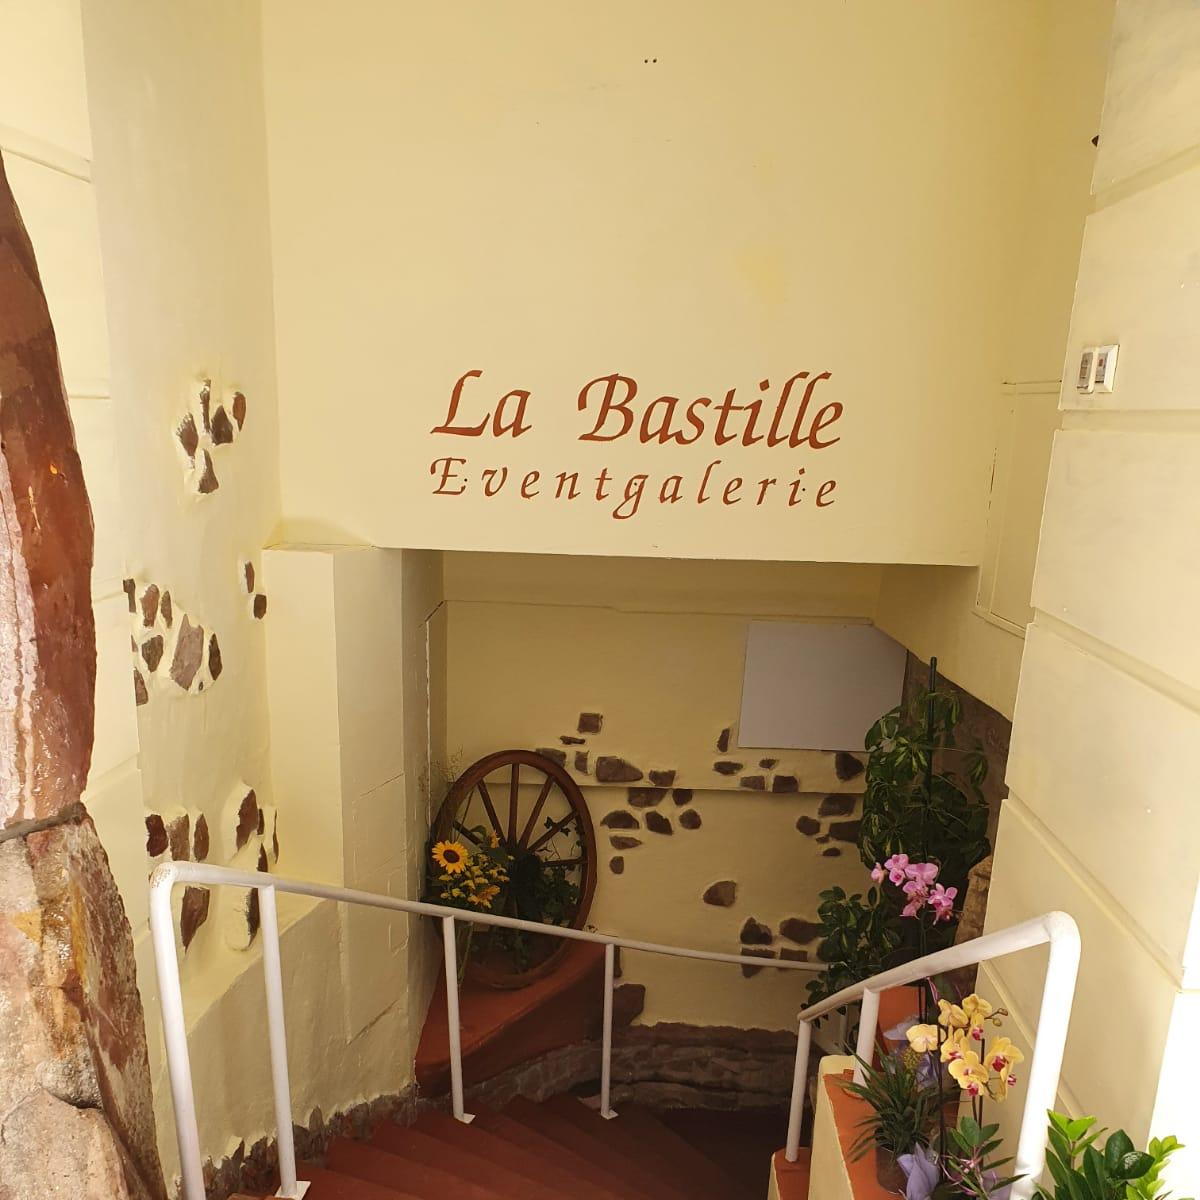 Restaurant "La Bastille" in  Michelstadt